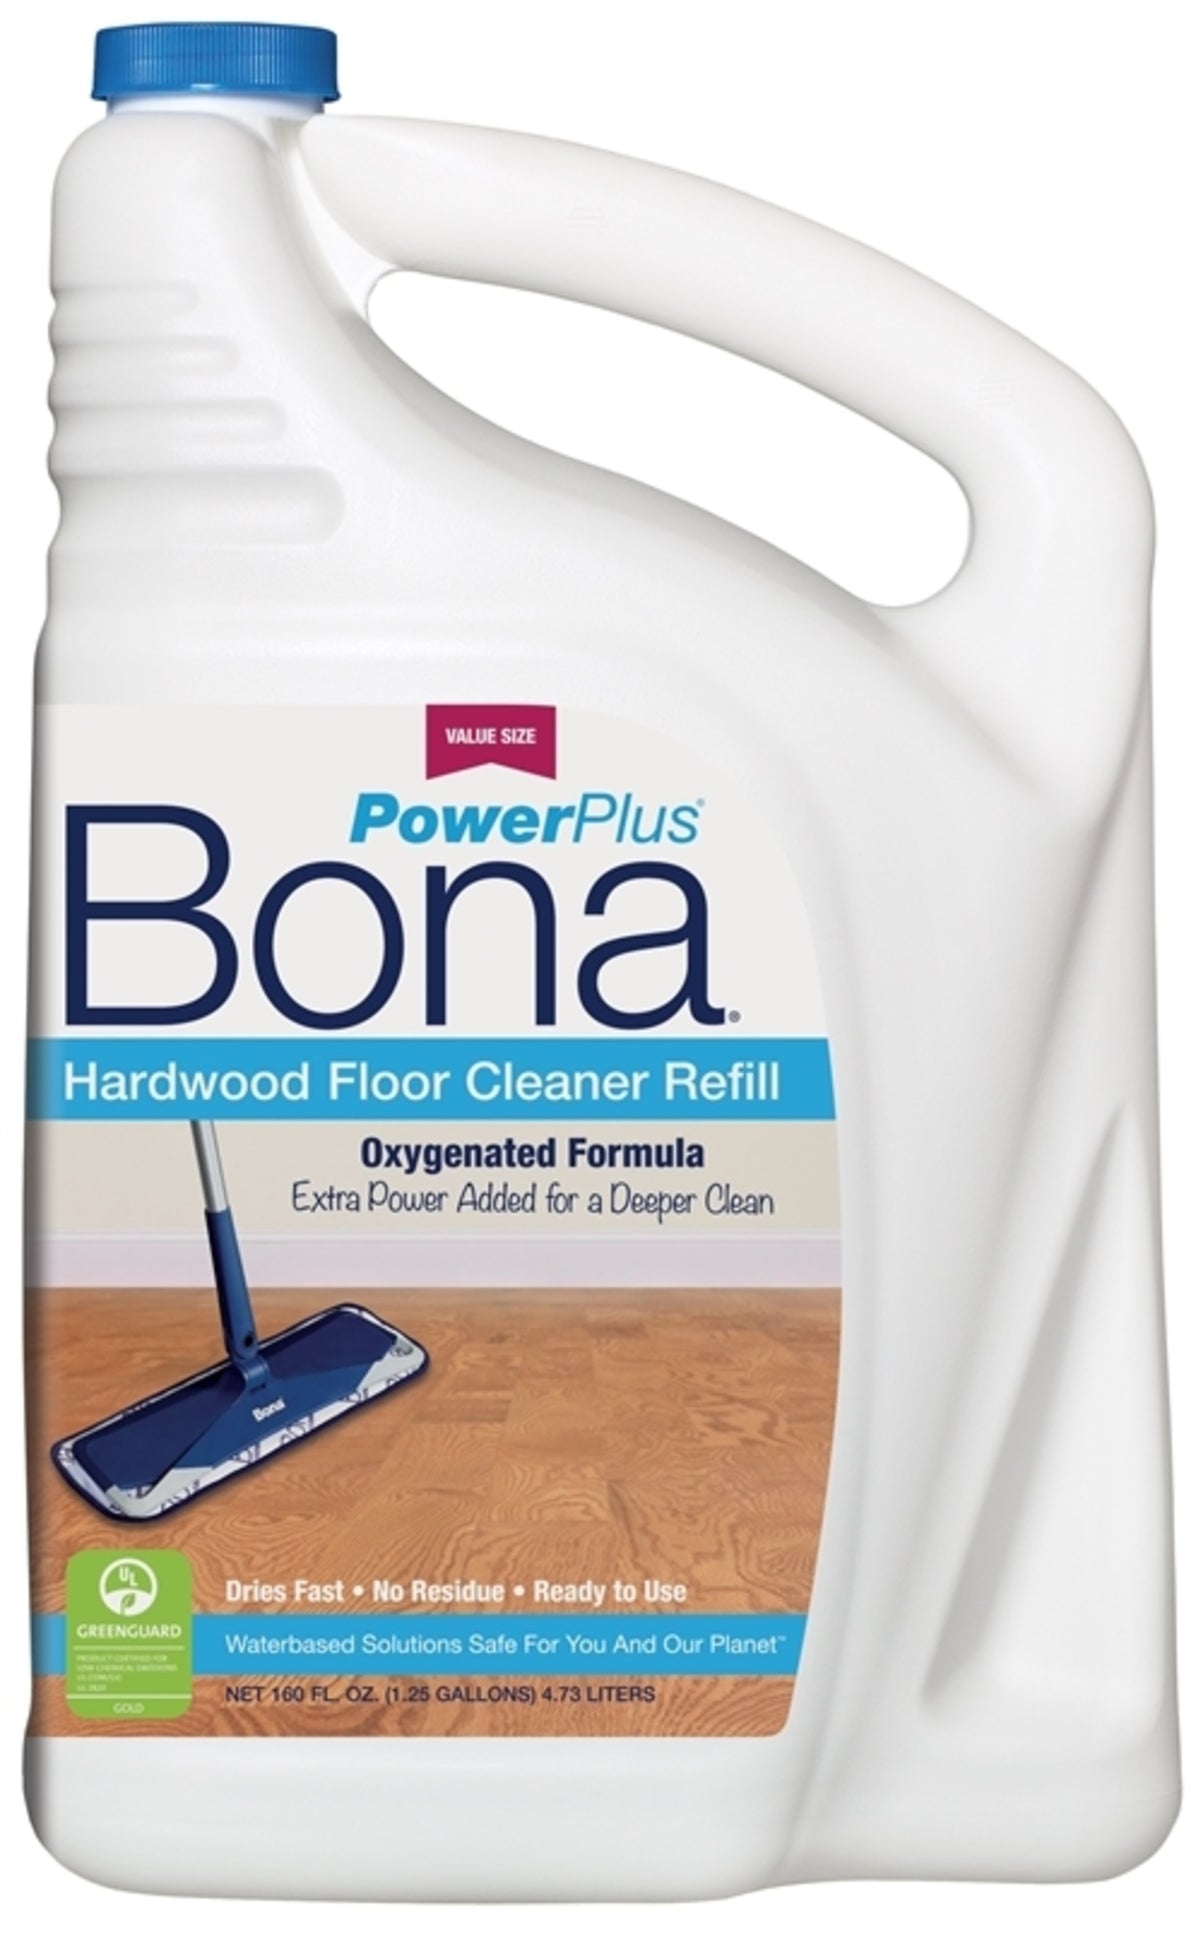 Bona WM850056001 PowerPlus Hardwood Floor Cleaner, 160 Oz